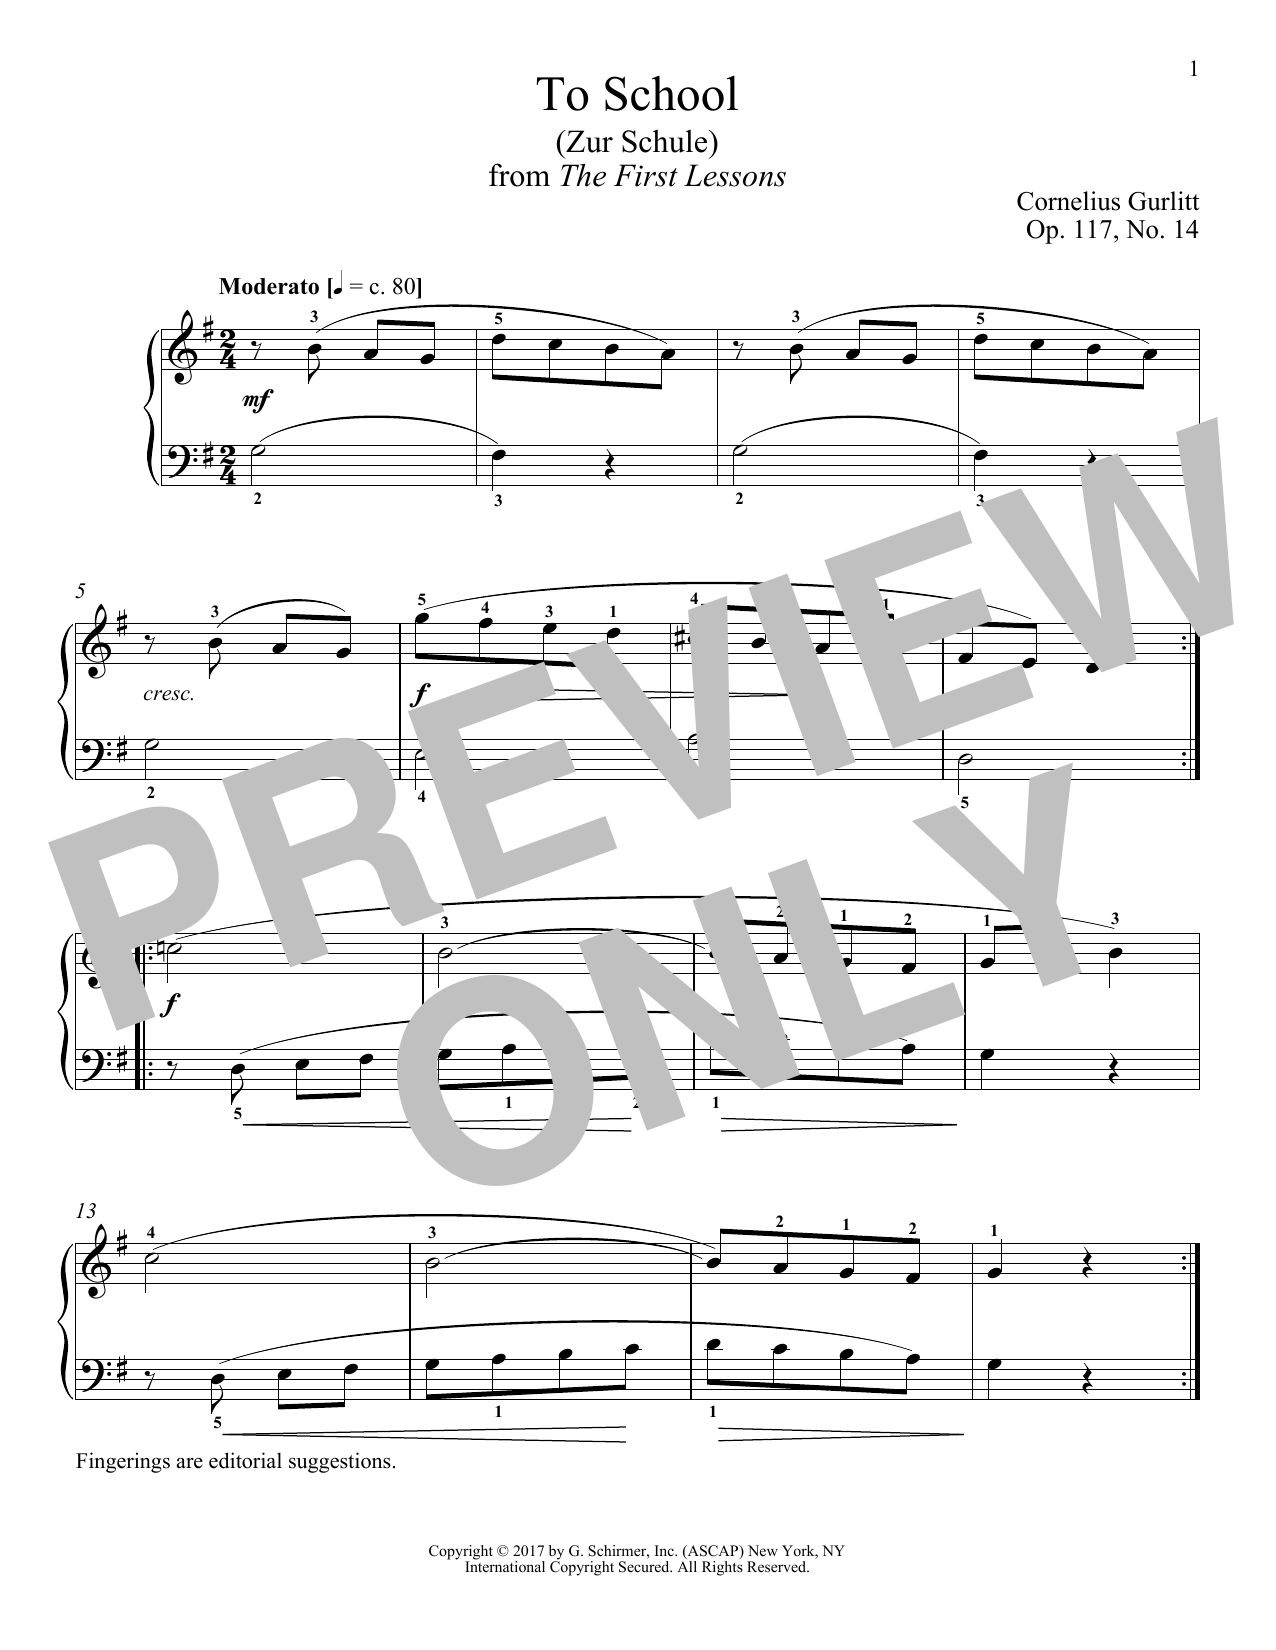 Download Cornelius Gurlitt To School (Zur Schule), Op. 117, No. 14 Sheet Music and learn how to play Piano PDF digital score in minutes